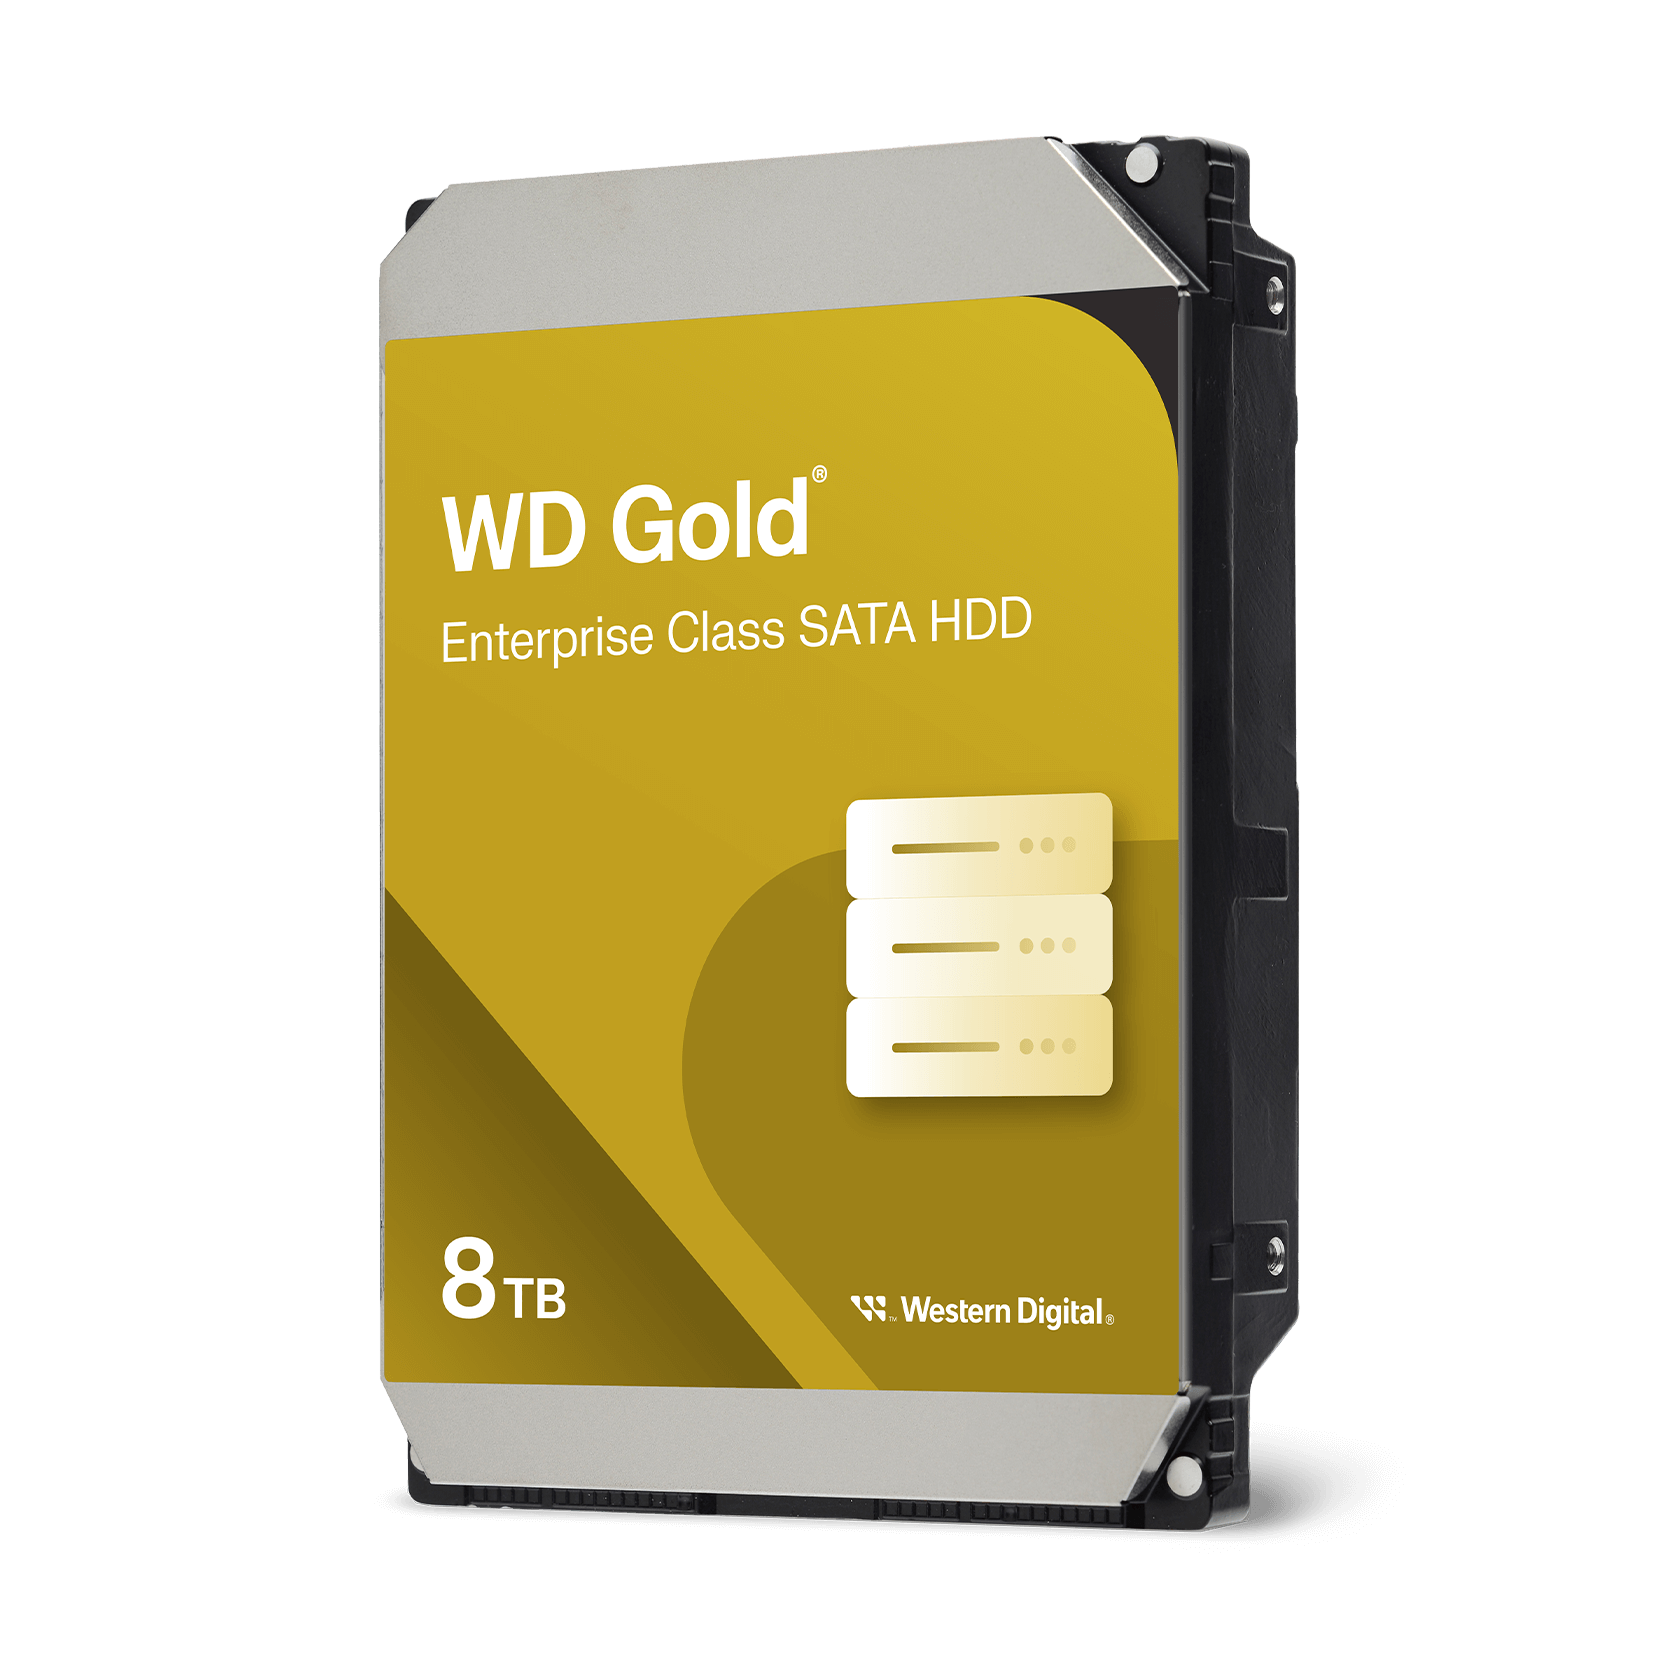 Western Digital 8TB WD Gold™ Enterprise Class SATA HDD - Internal Hard Drive - WD8005FRYZ